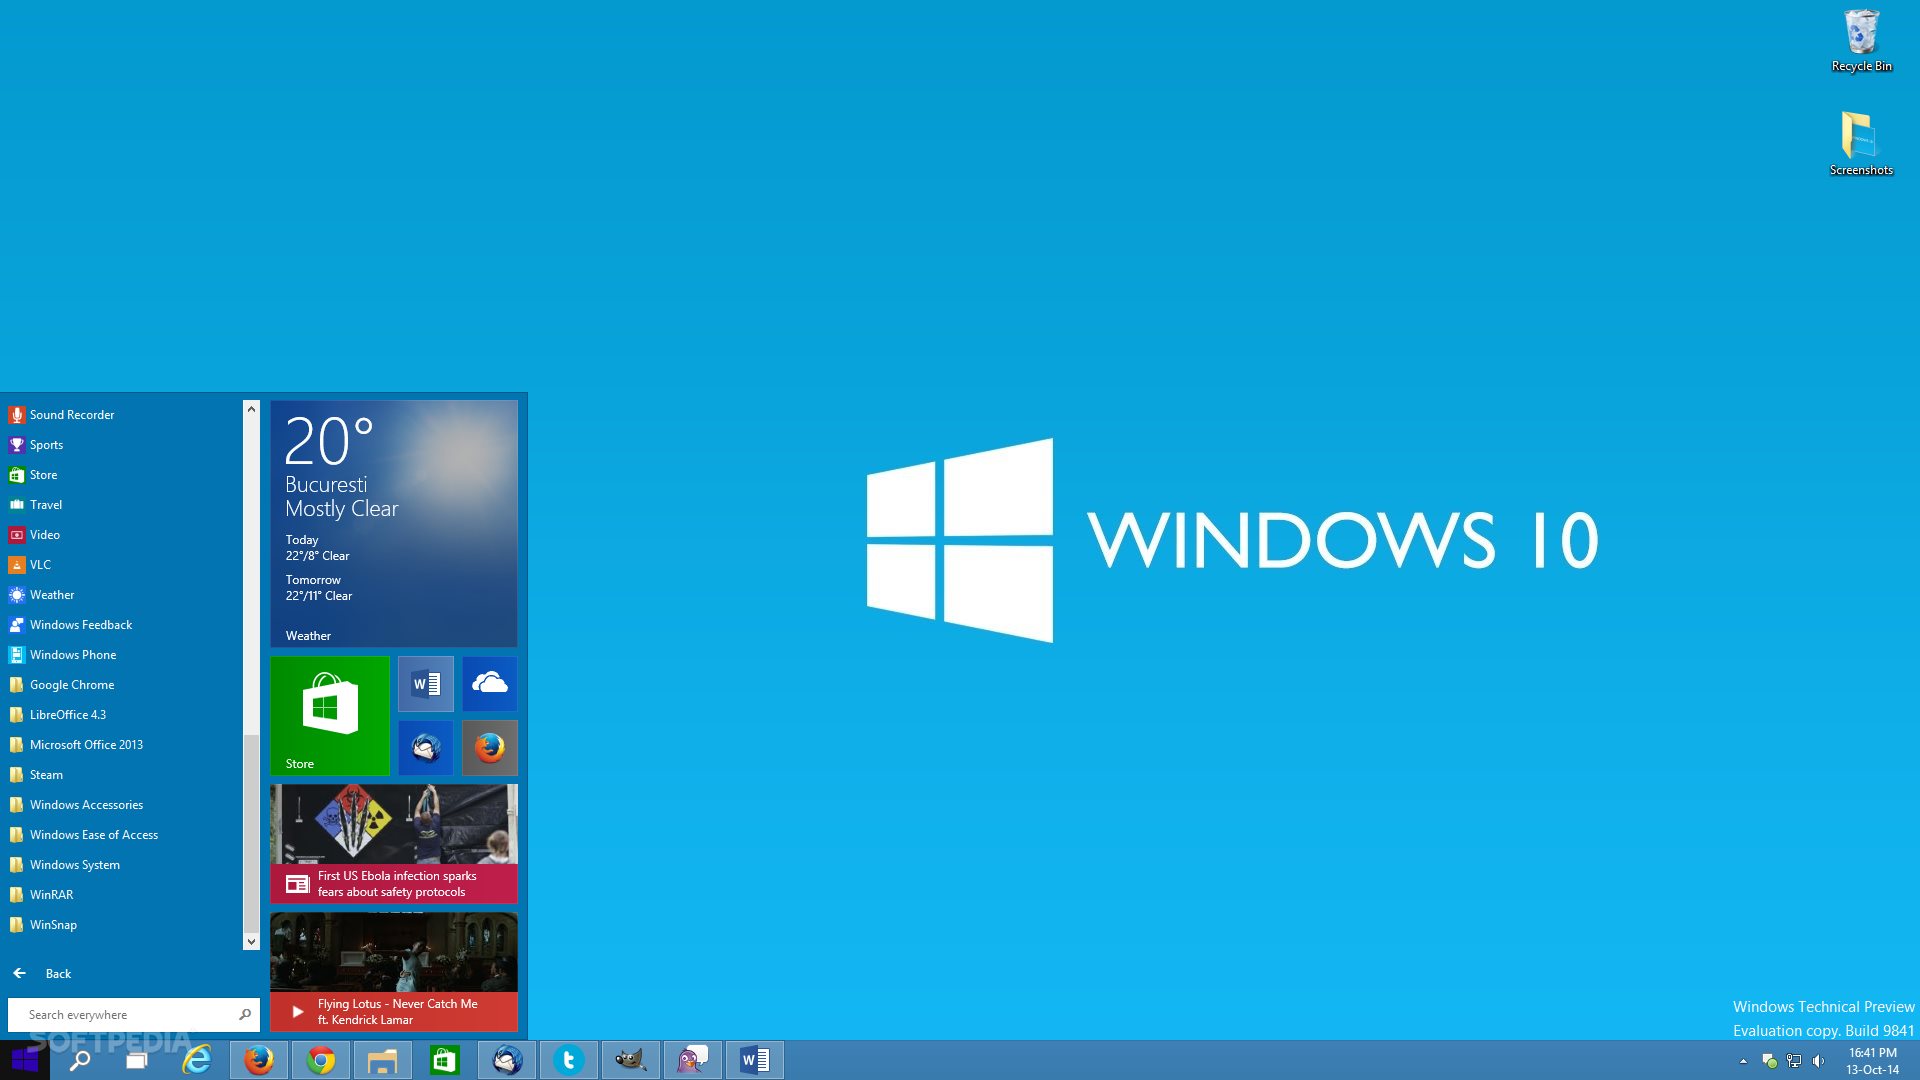 windows 10 32 bit download